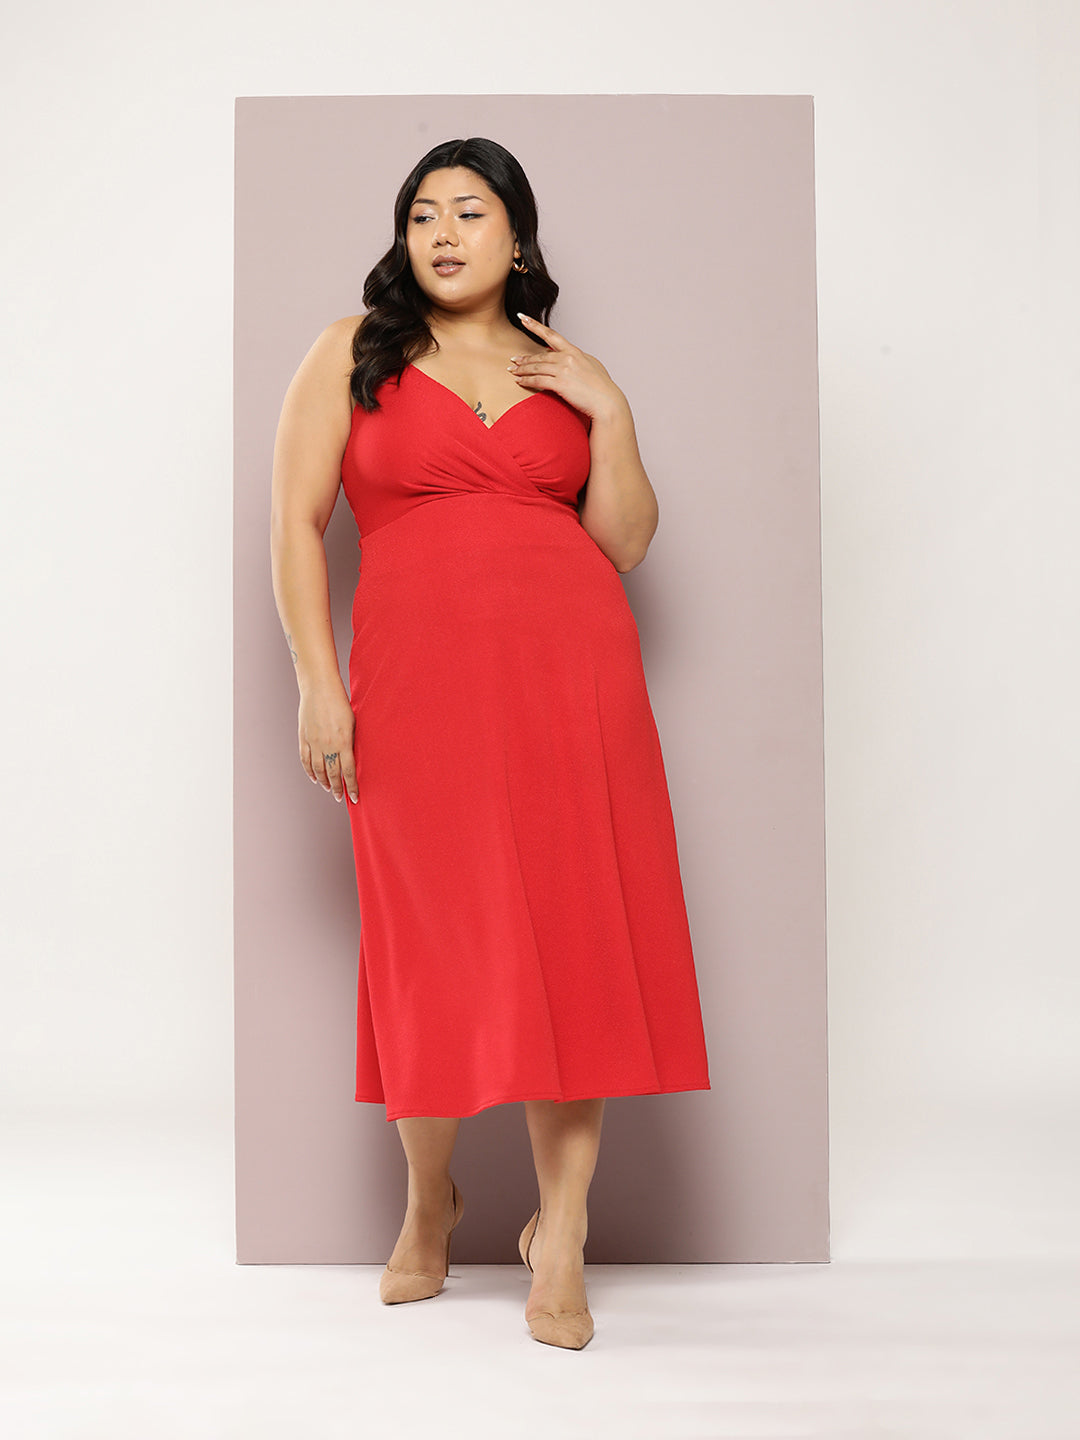 Stylish Red midi dress.